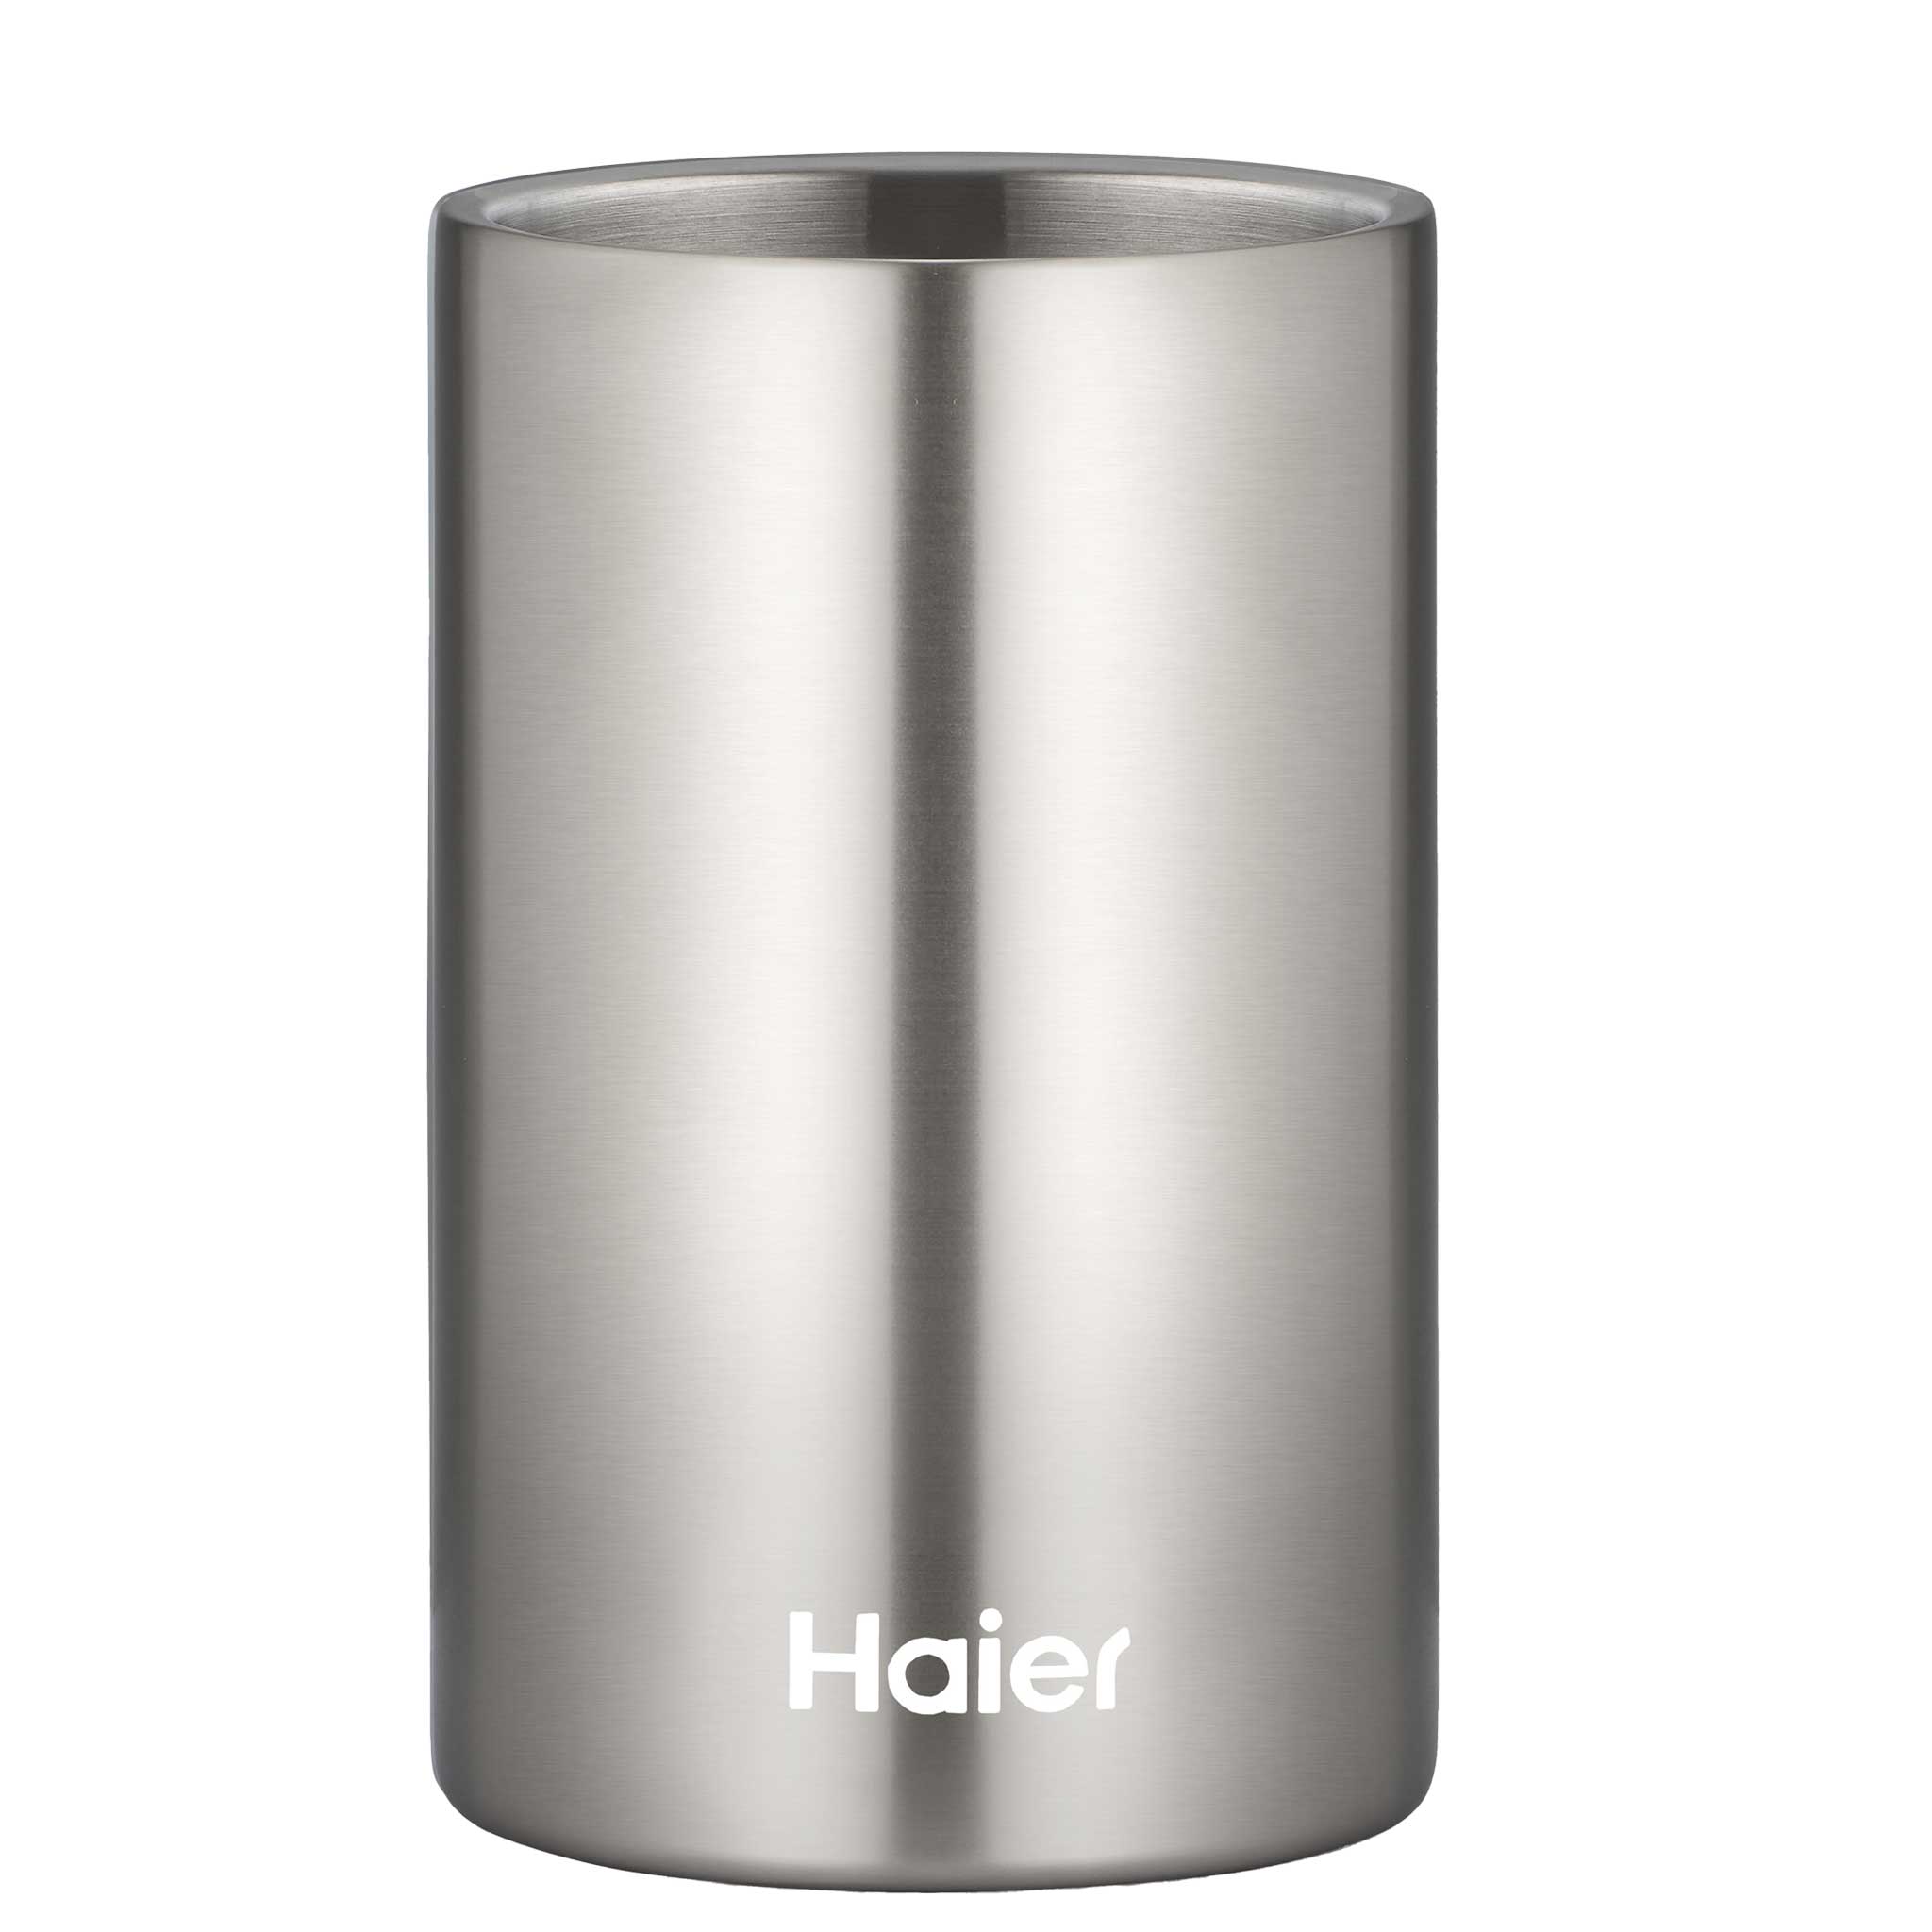 Haier Wine Cooler Bucket, Premium Quality, Stainless Steel